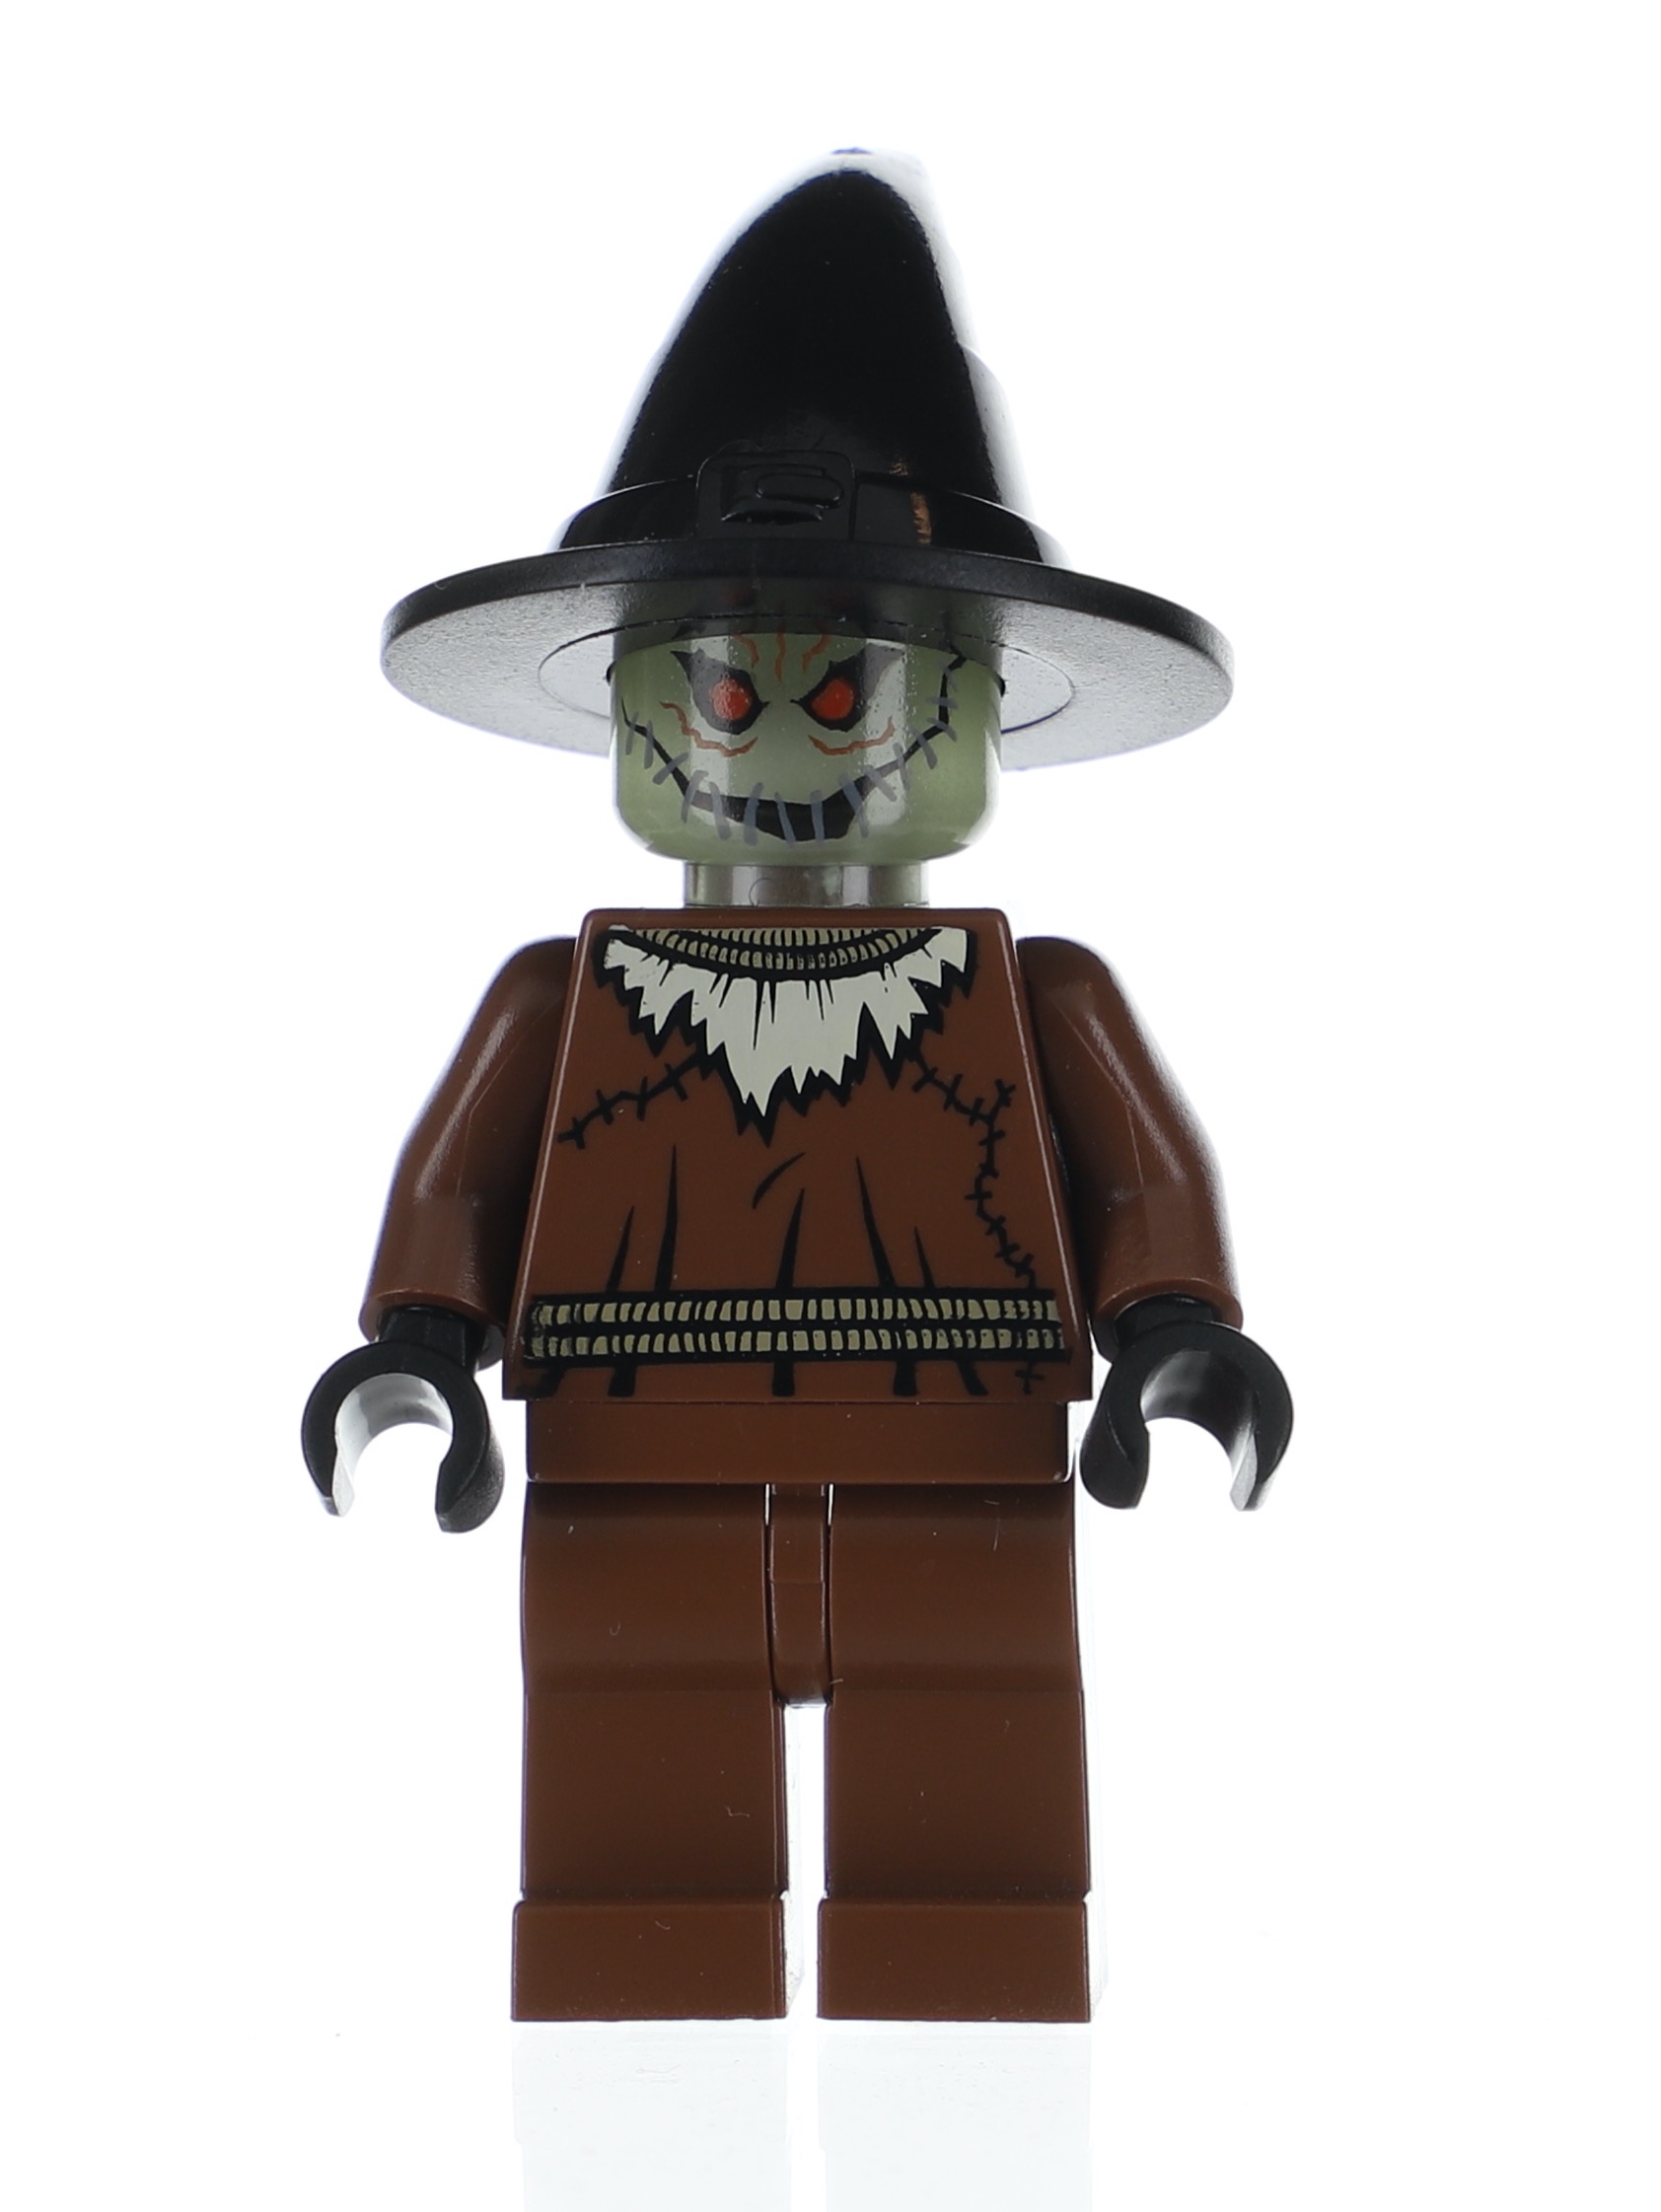 lego batman scarecrow costume